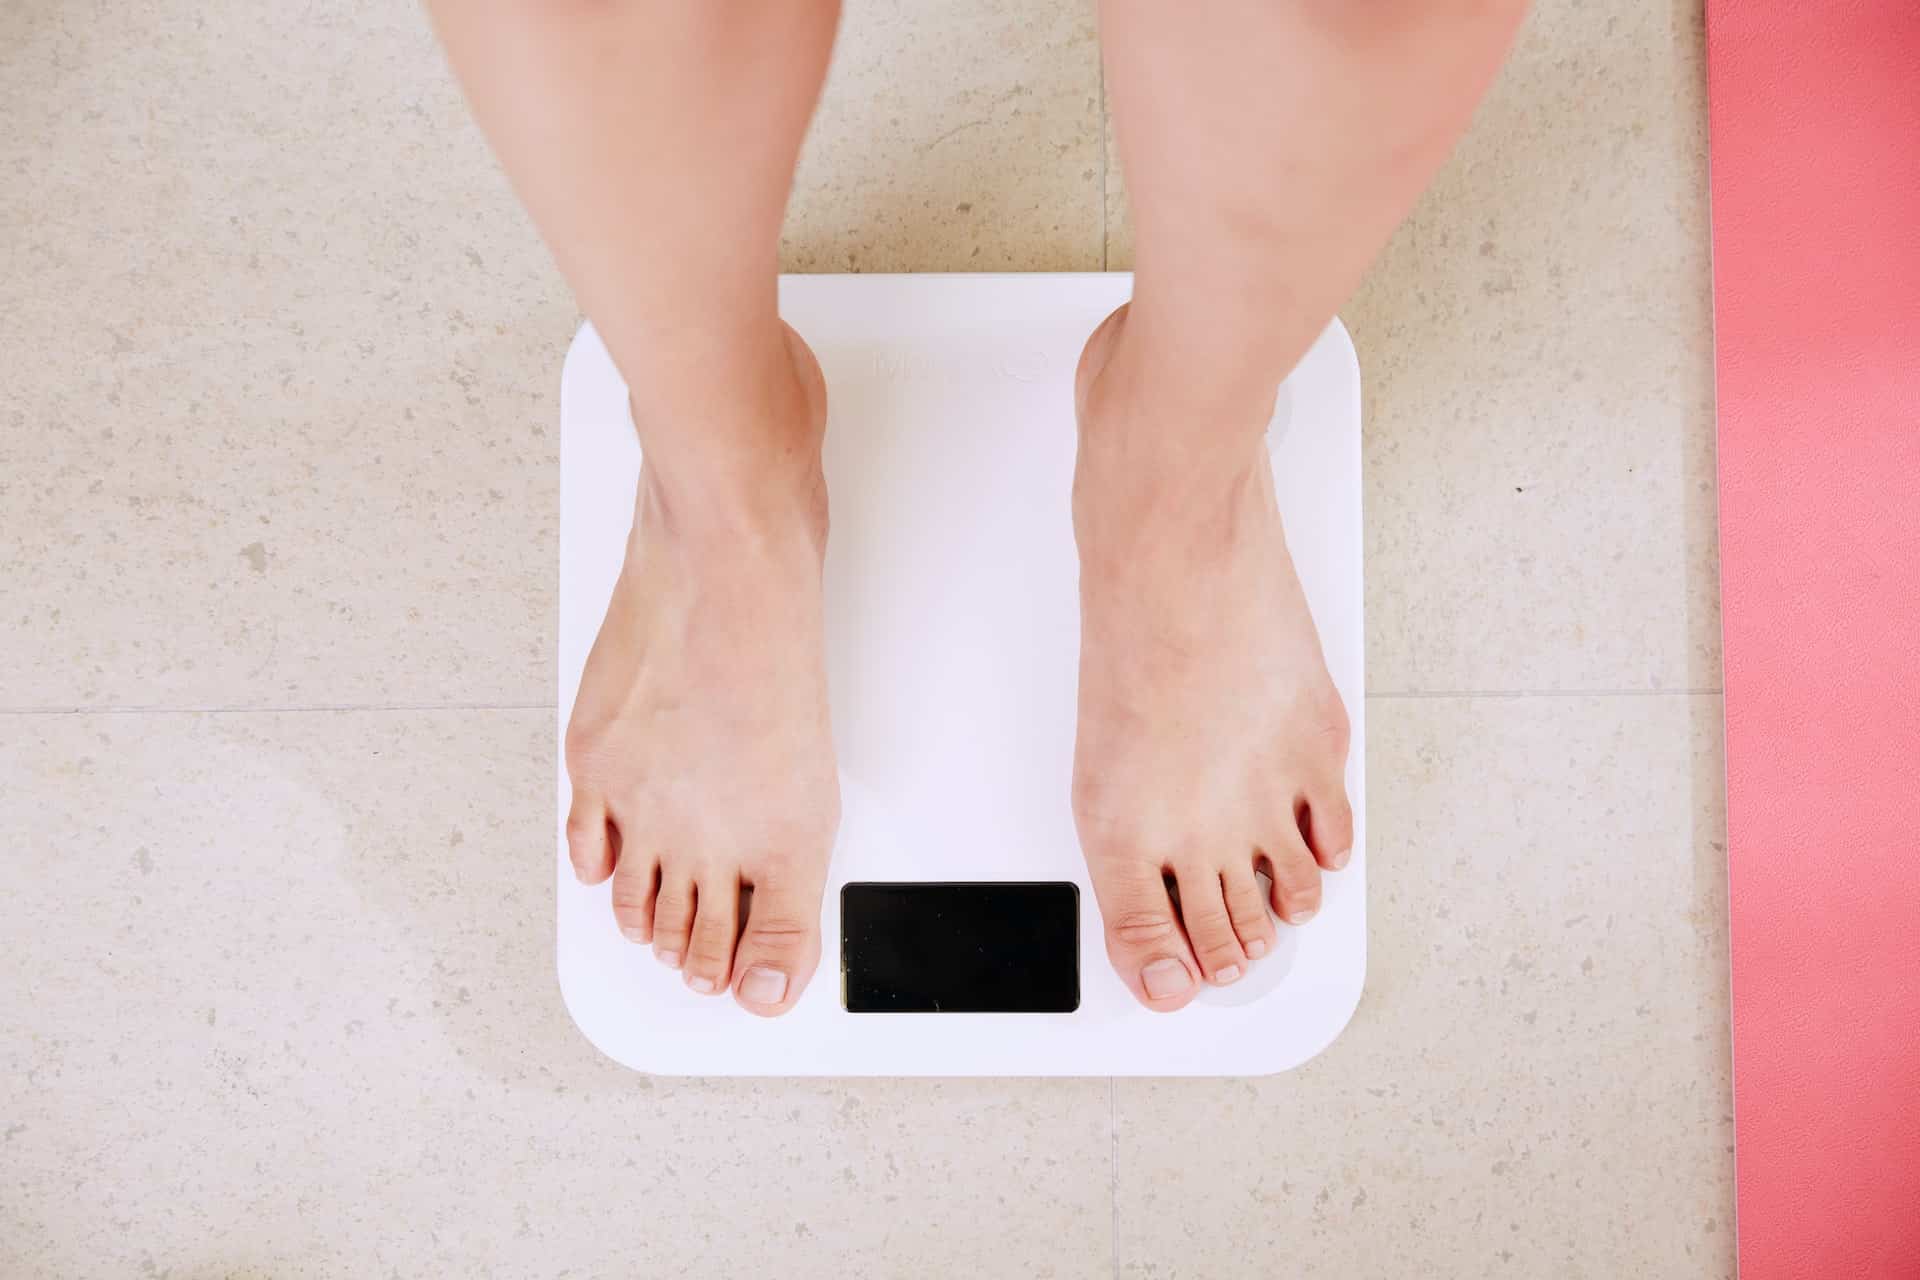 Wegovy Weight Loss FDA Header Image